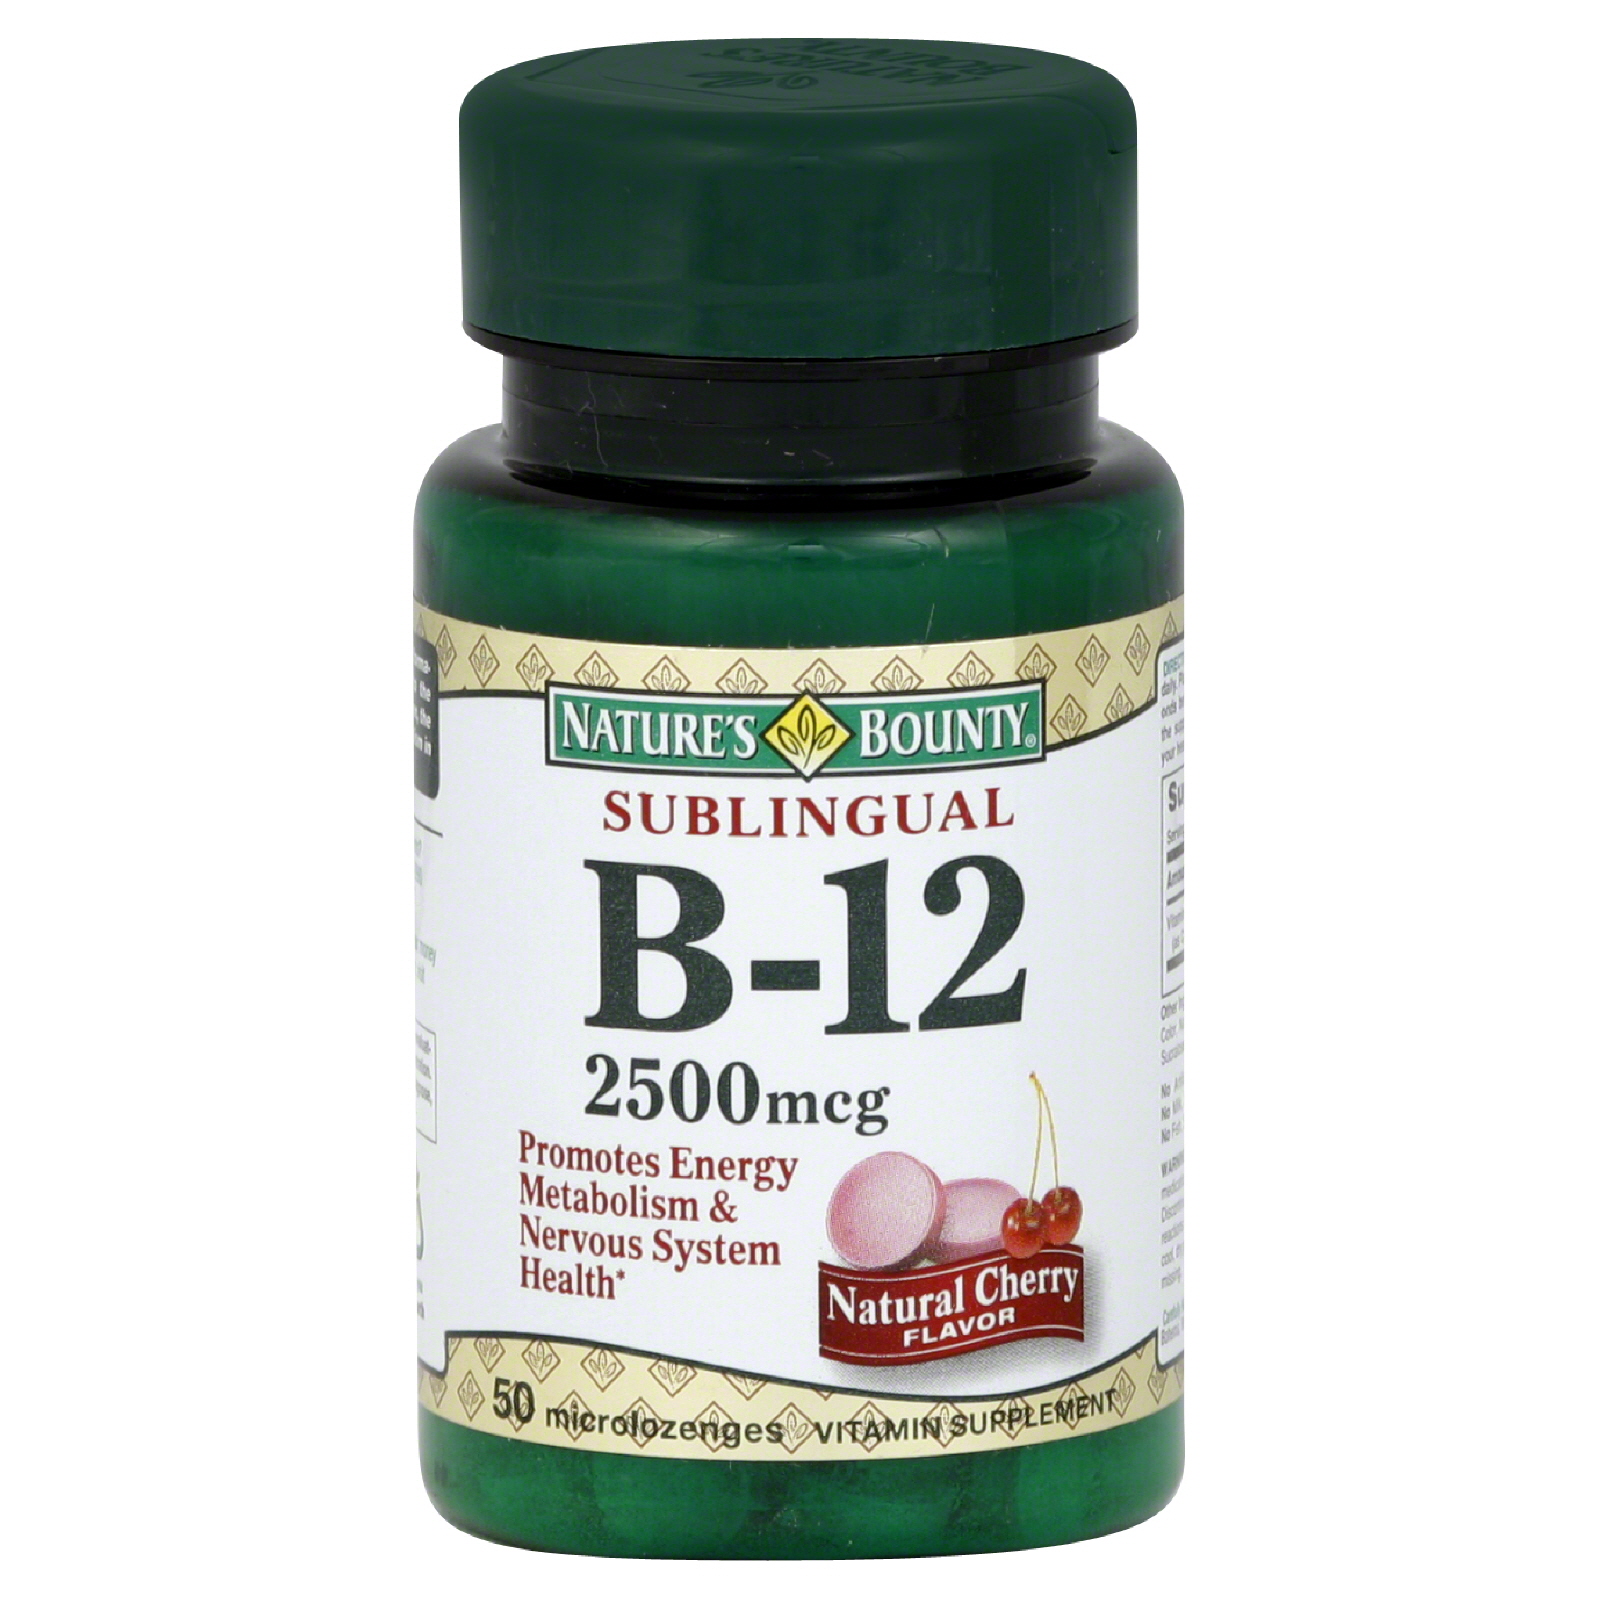 Nature's Bounty Vitamin B-12, 2500 mcg, Microlozenges, Natural Cherry Flavor, 50 microlozenges